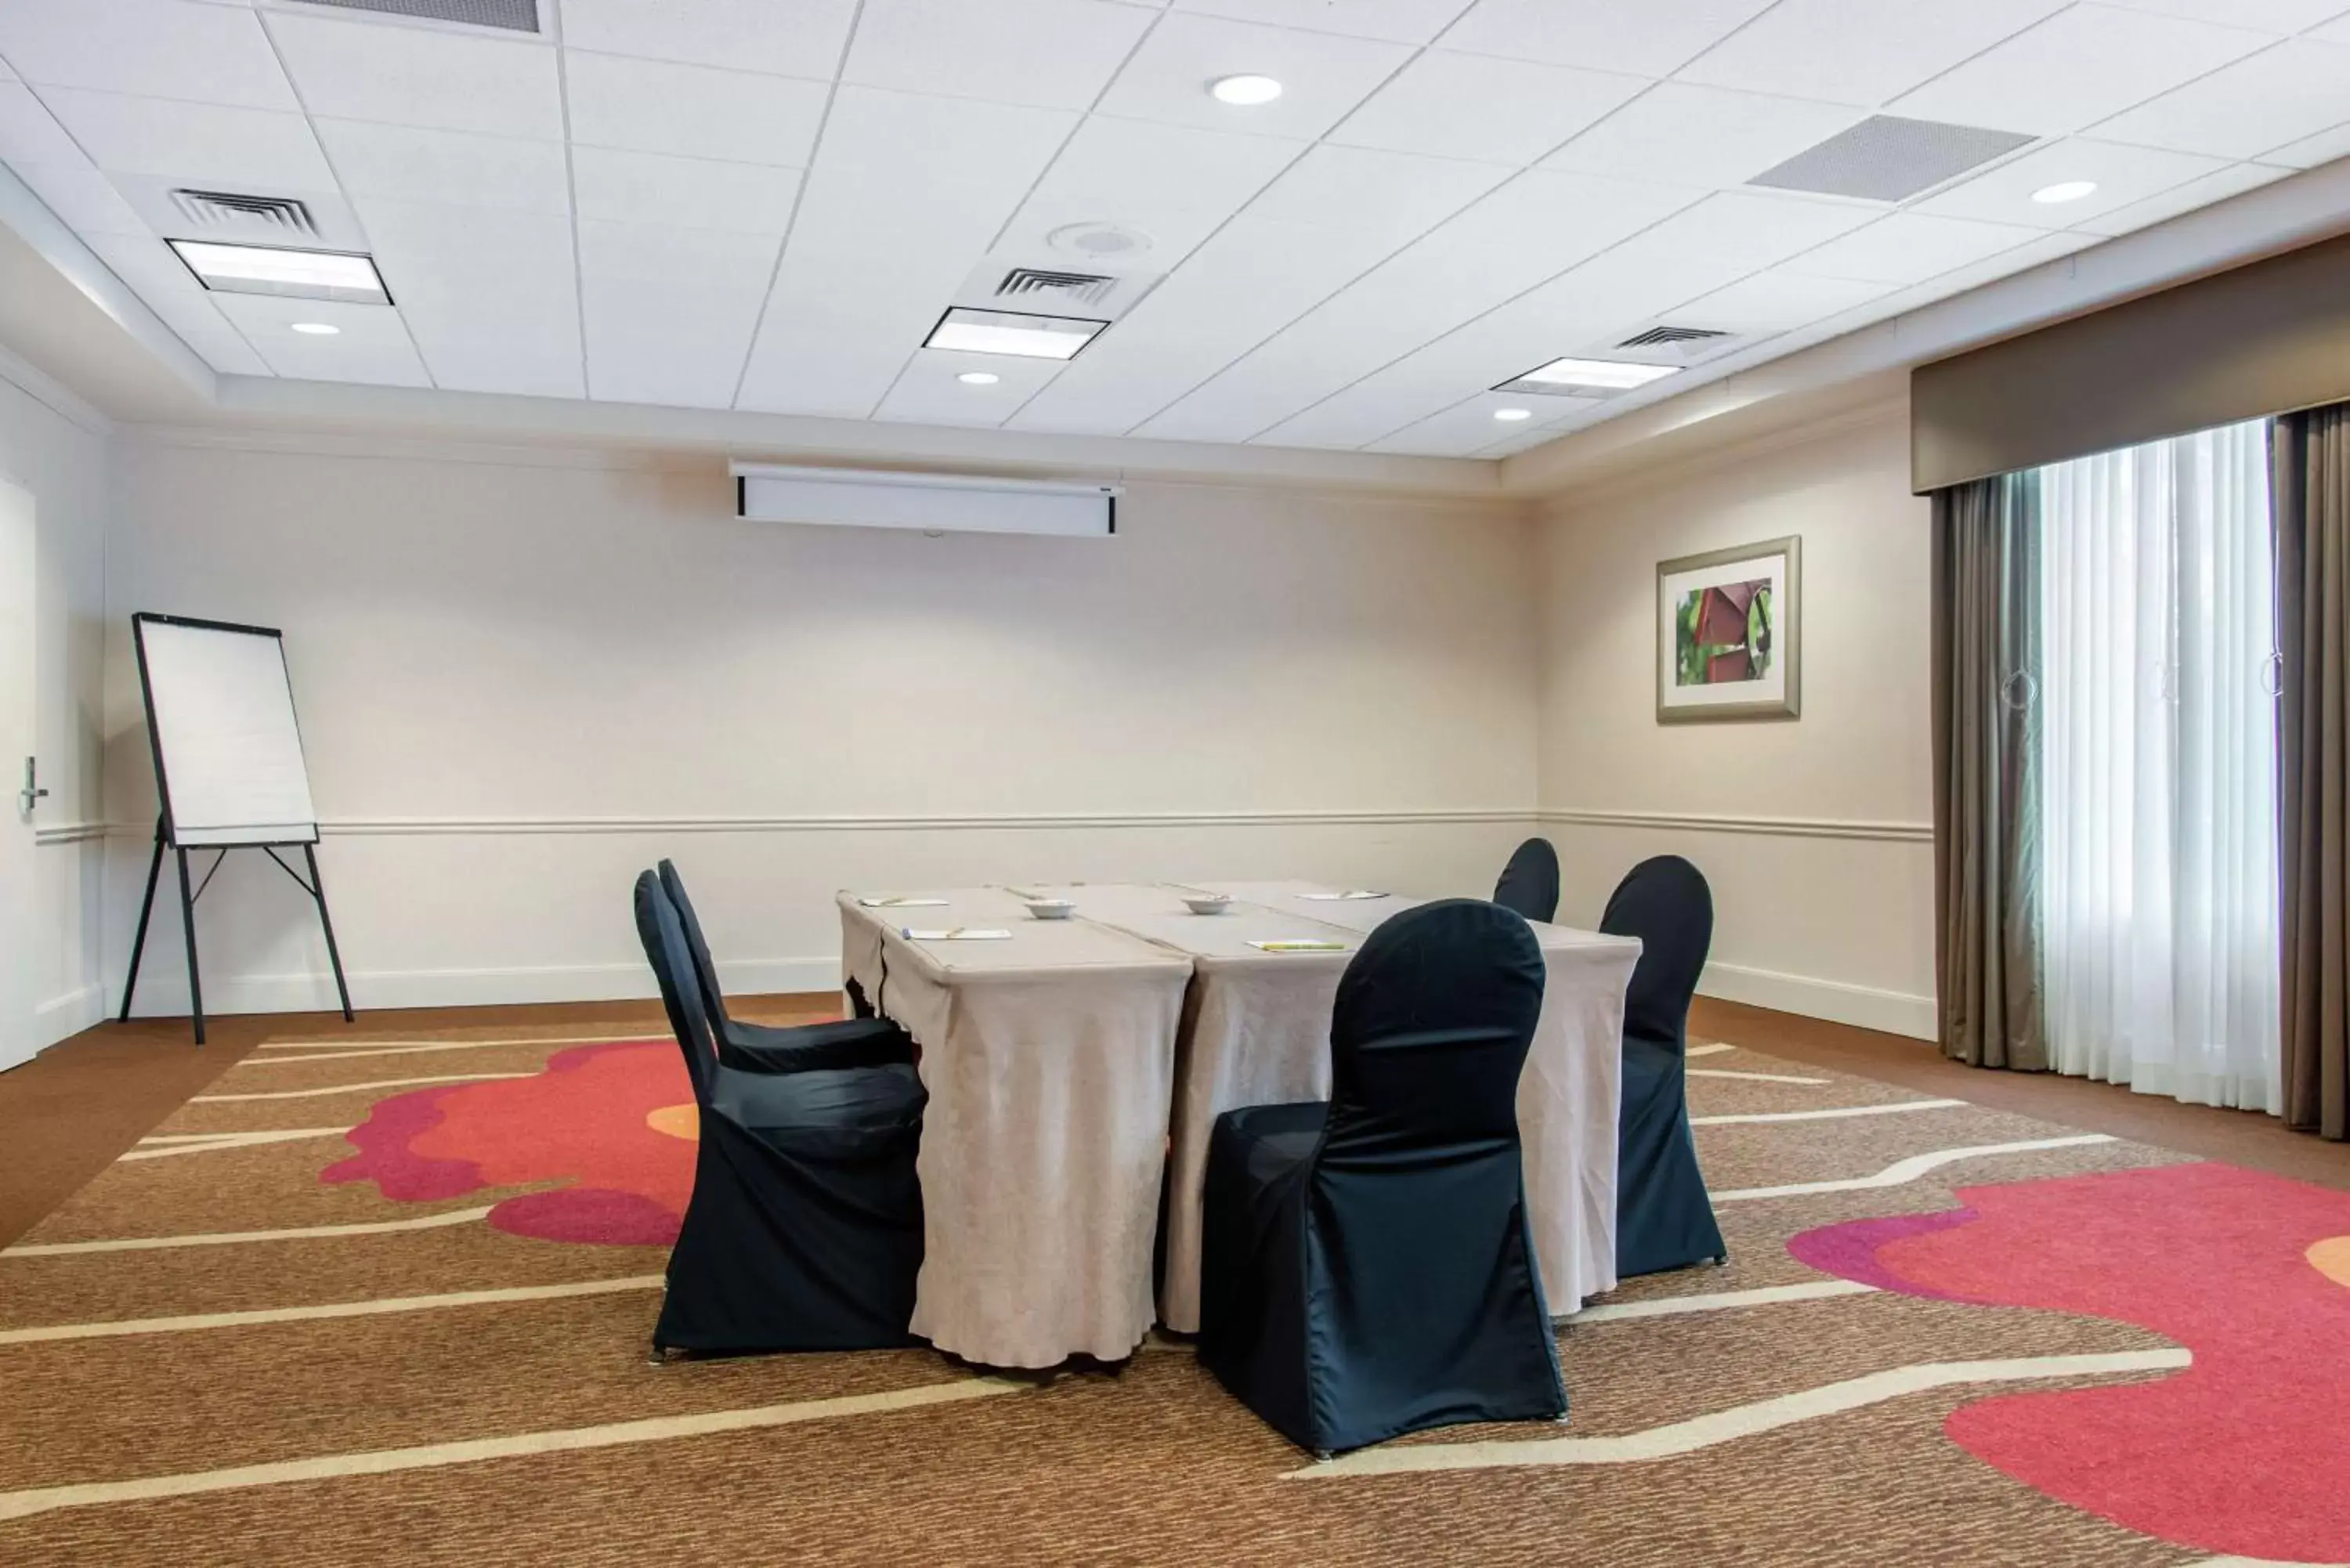 Meeting/conference room, Banquet Facilities in Hilton Garden Inn Portland Airport